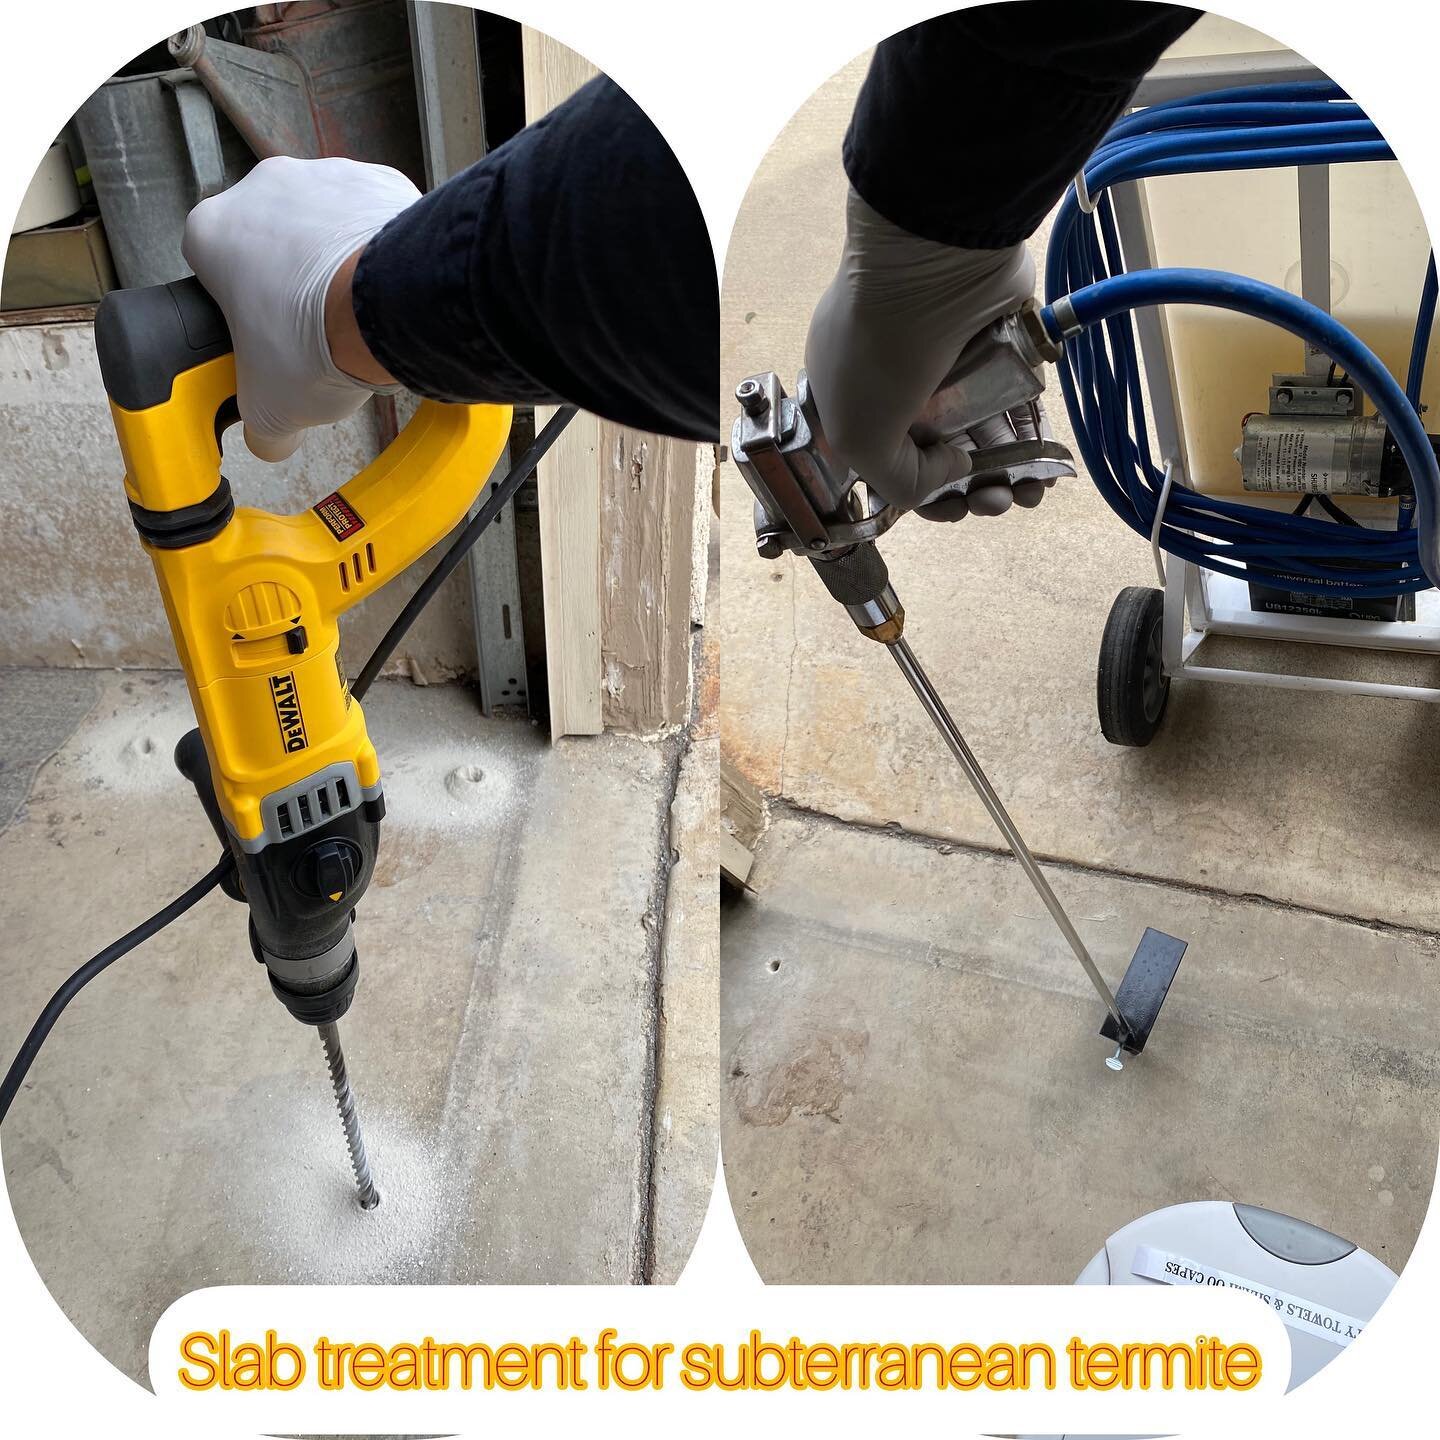 Slab treatment for subterranean termite by Y&rsquo;s Pest Control #termite #pestcontrol #slabtreatment #subterranean